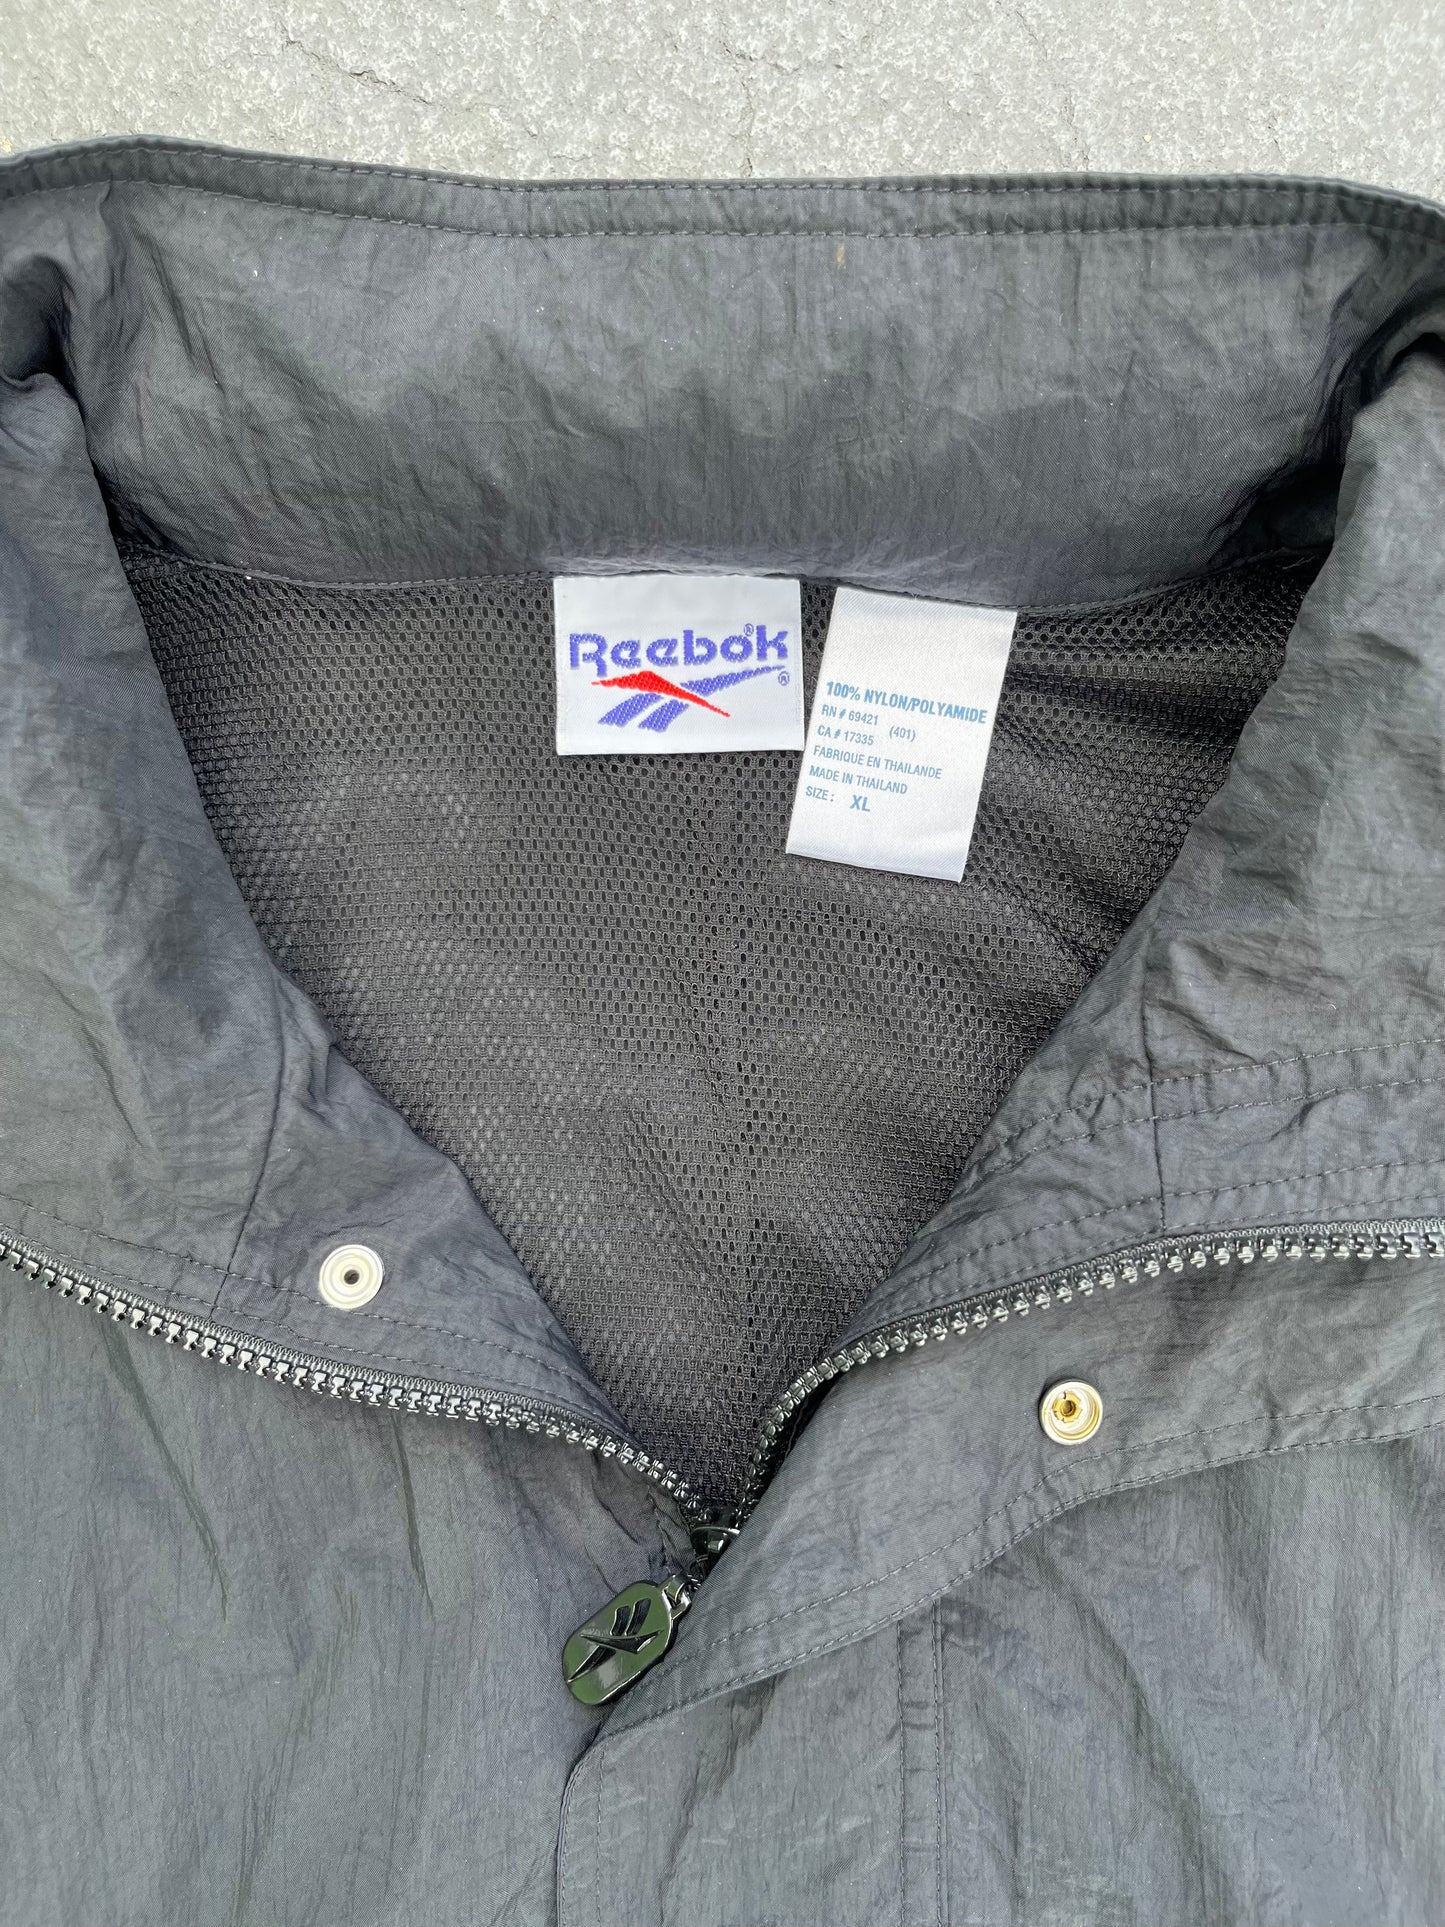 Vintage Reebok Windbreaker Jacket